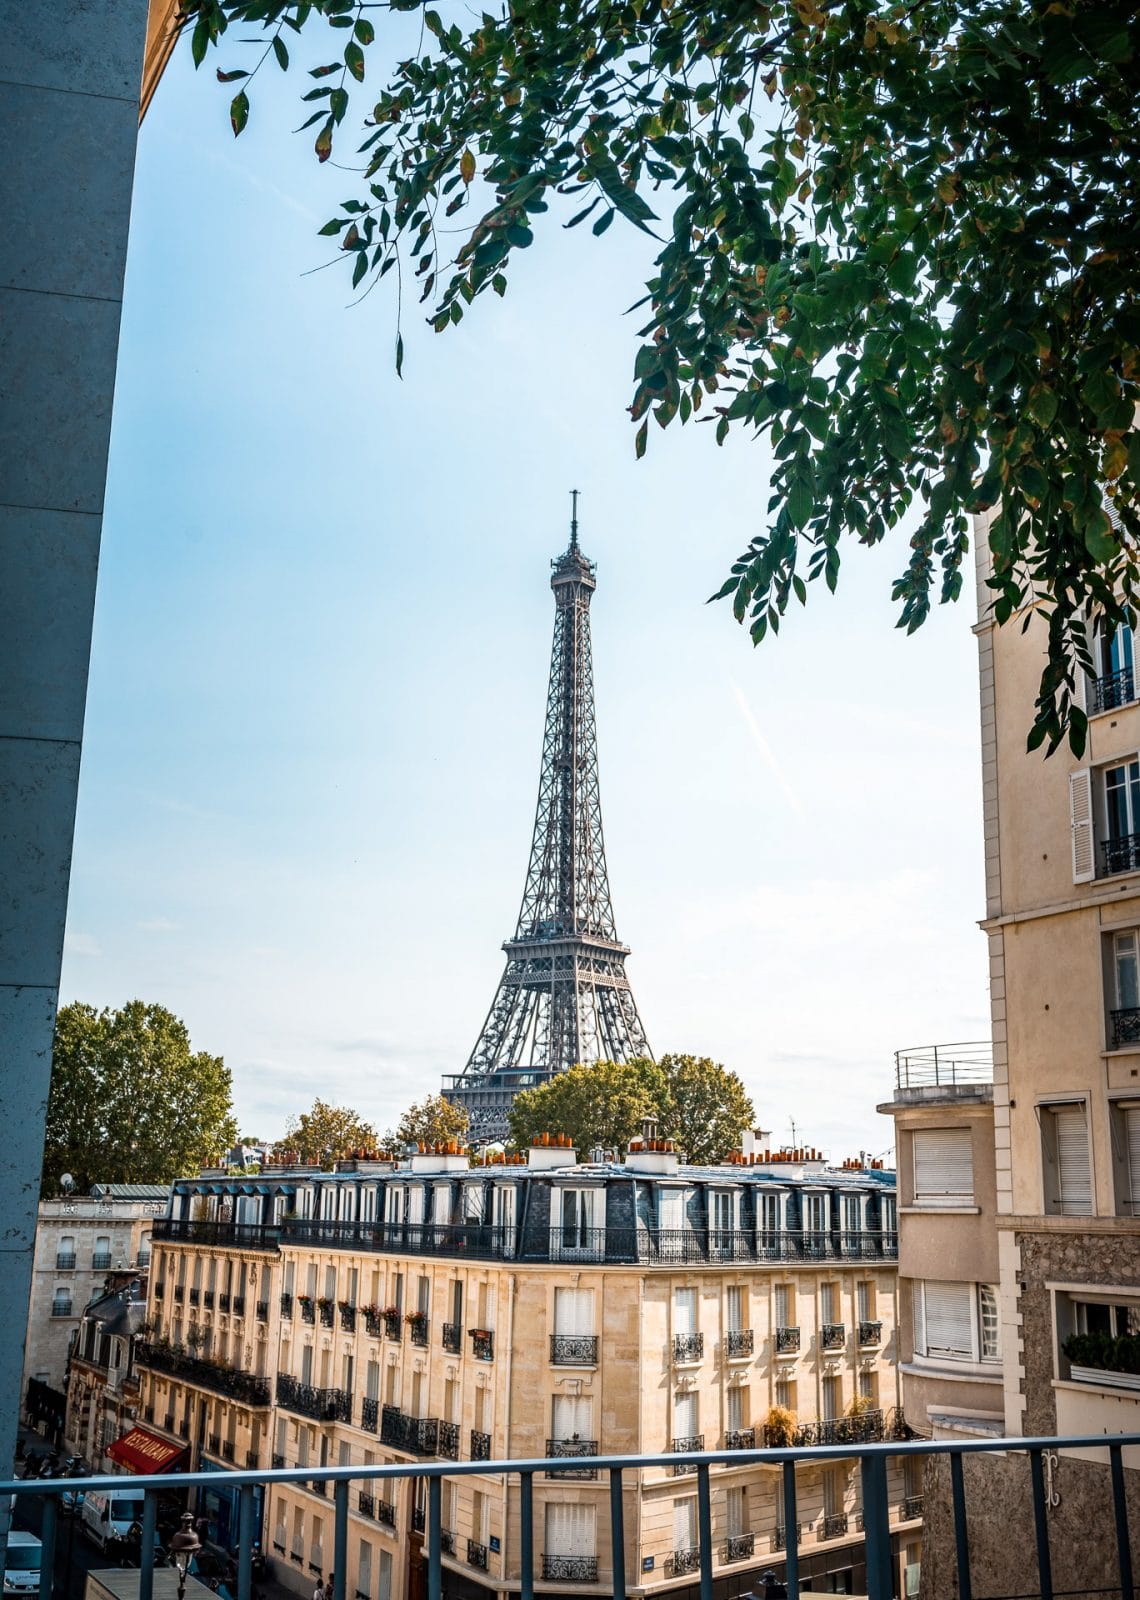 Paris Hotels near the Eiffel Tower